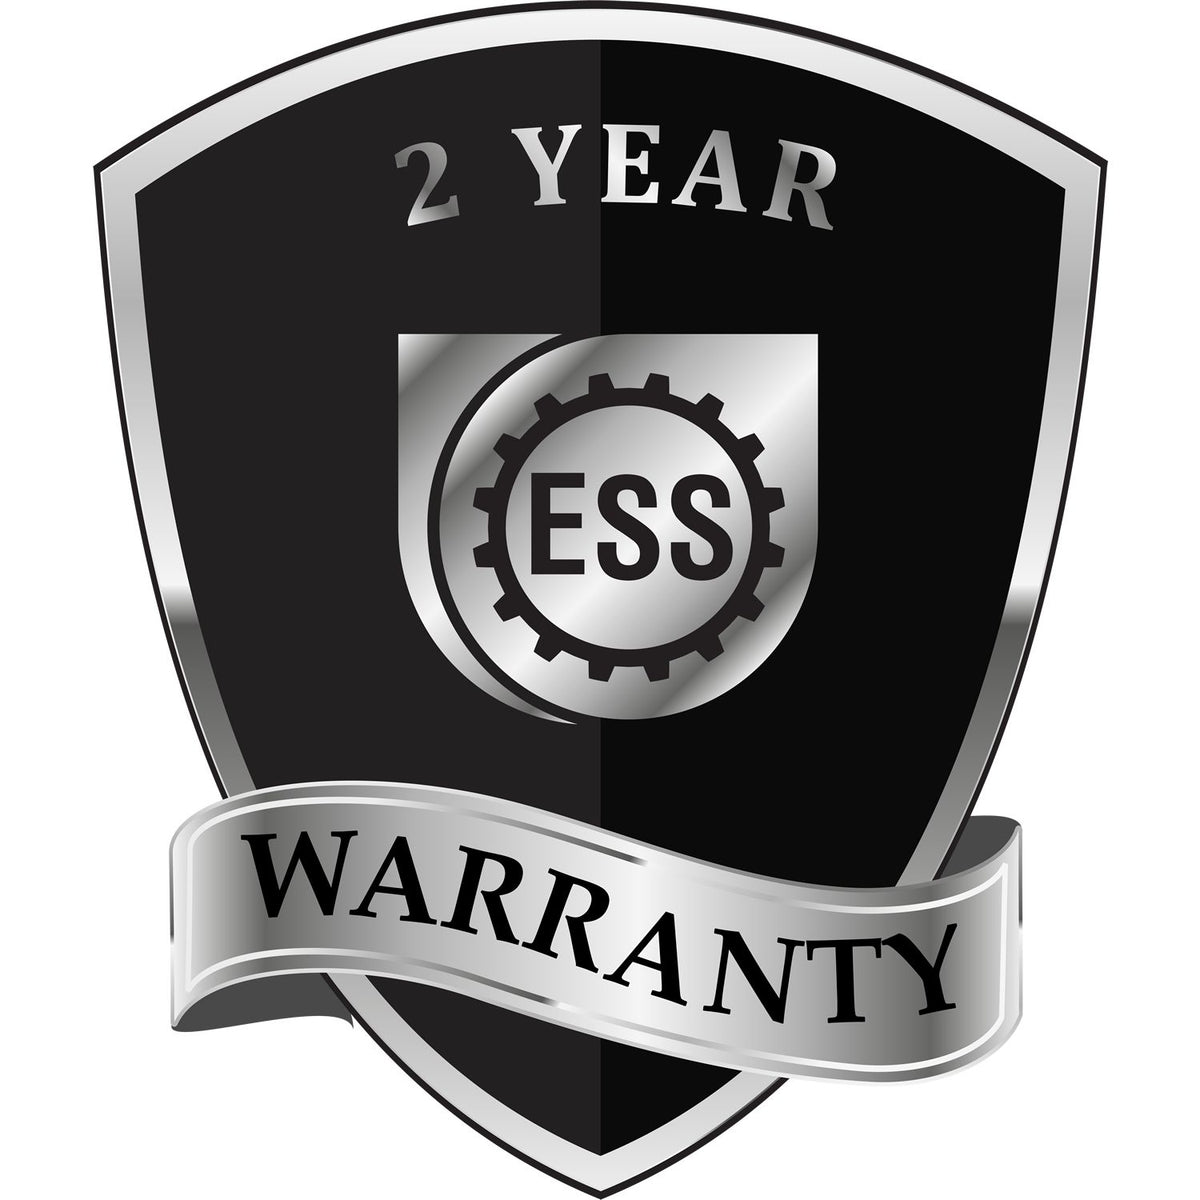 A black and silver badge or emblem showing warranty information for the Handheld Massachusetts Professional Geologist Embosser